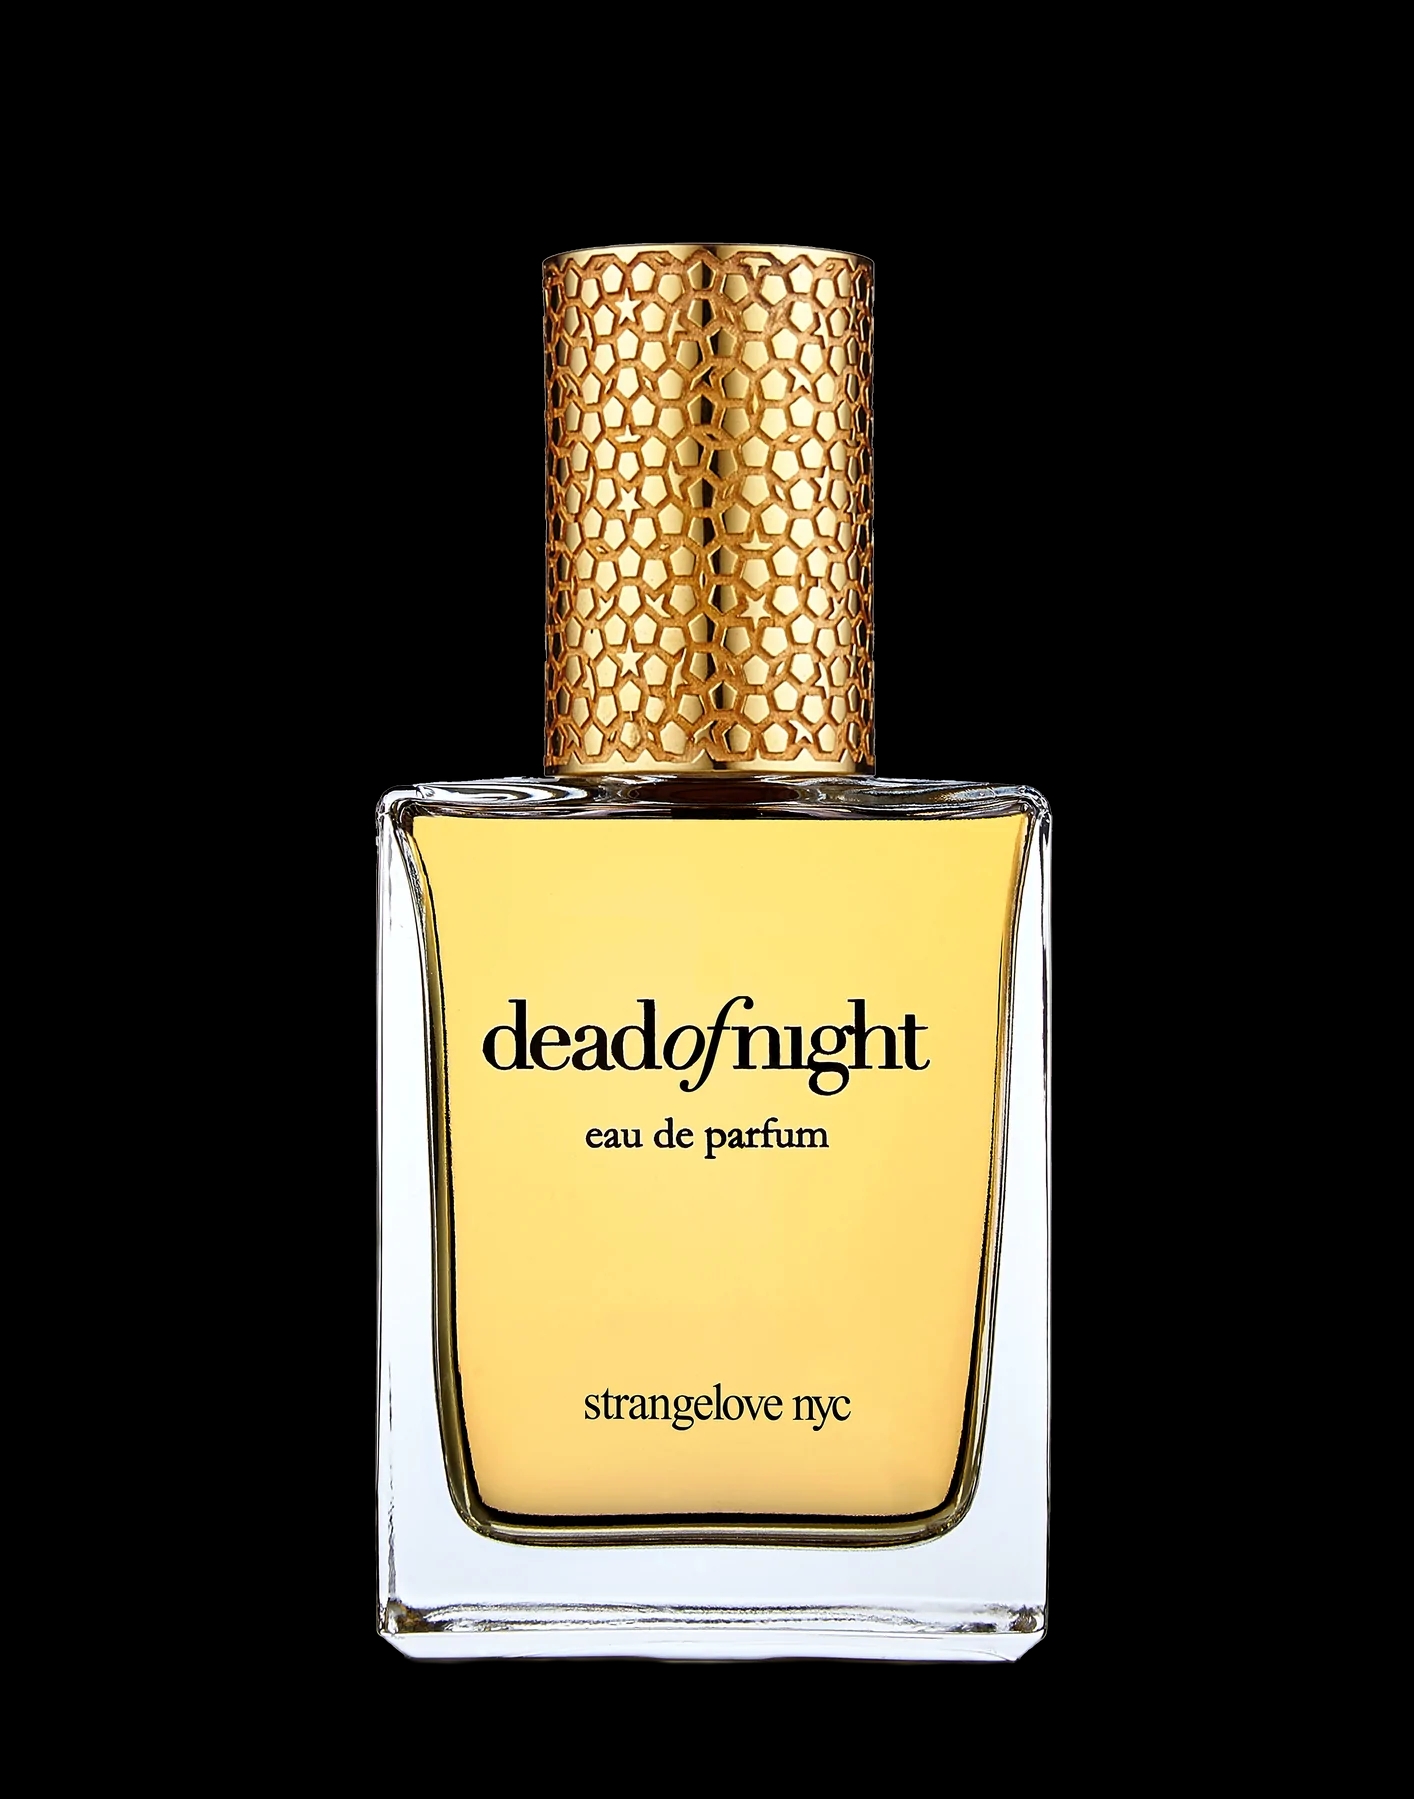 Strangelove - deadofnight 50 ml | Perfume Lounge